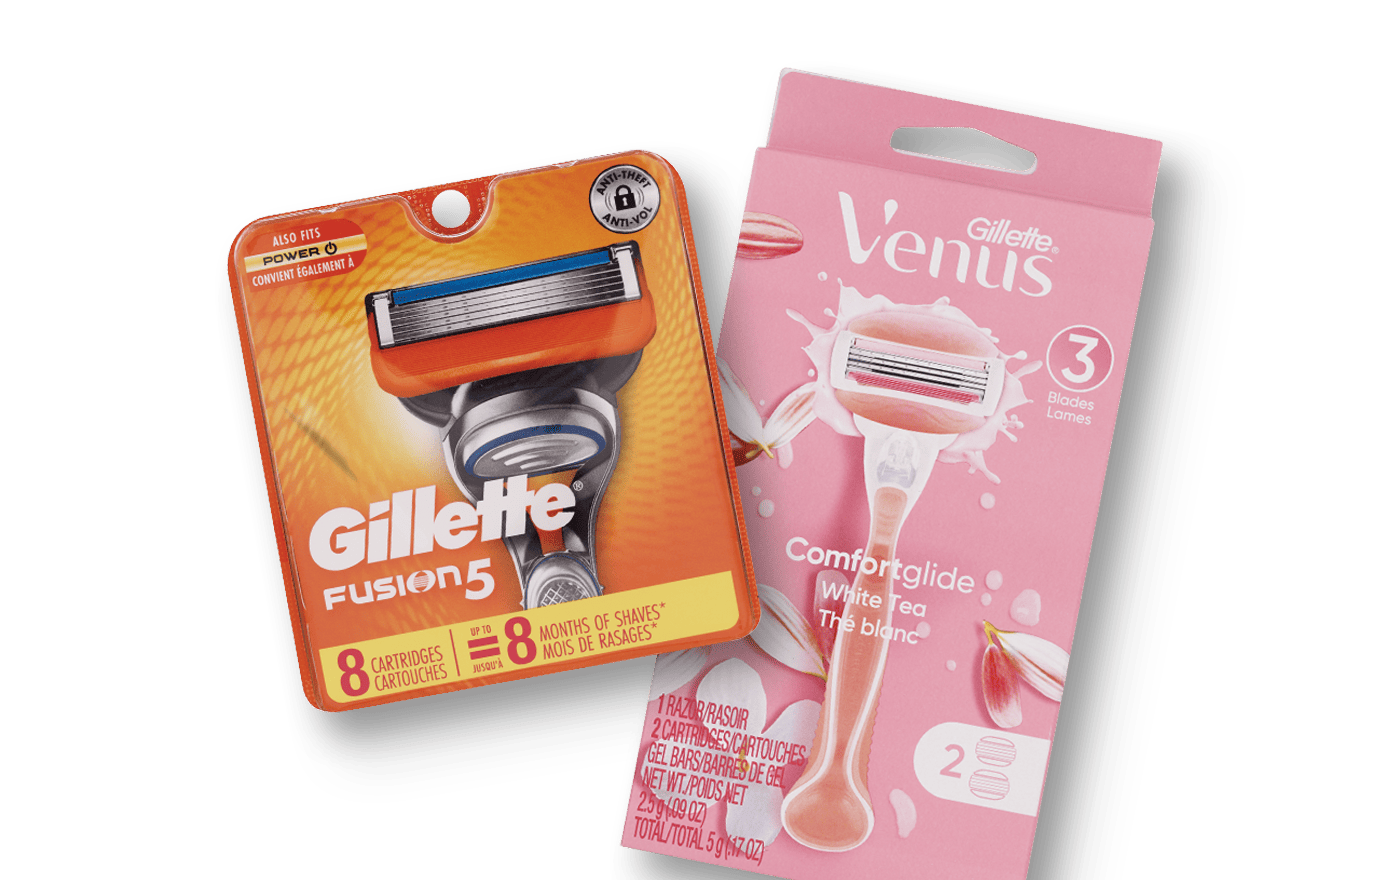 Gillette and Gillette Venus razors and refills